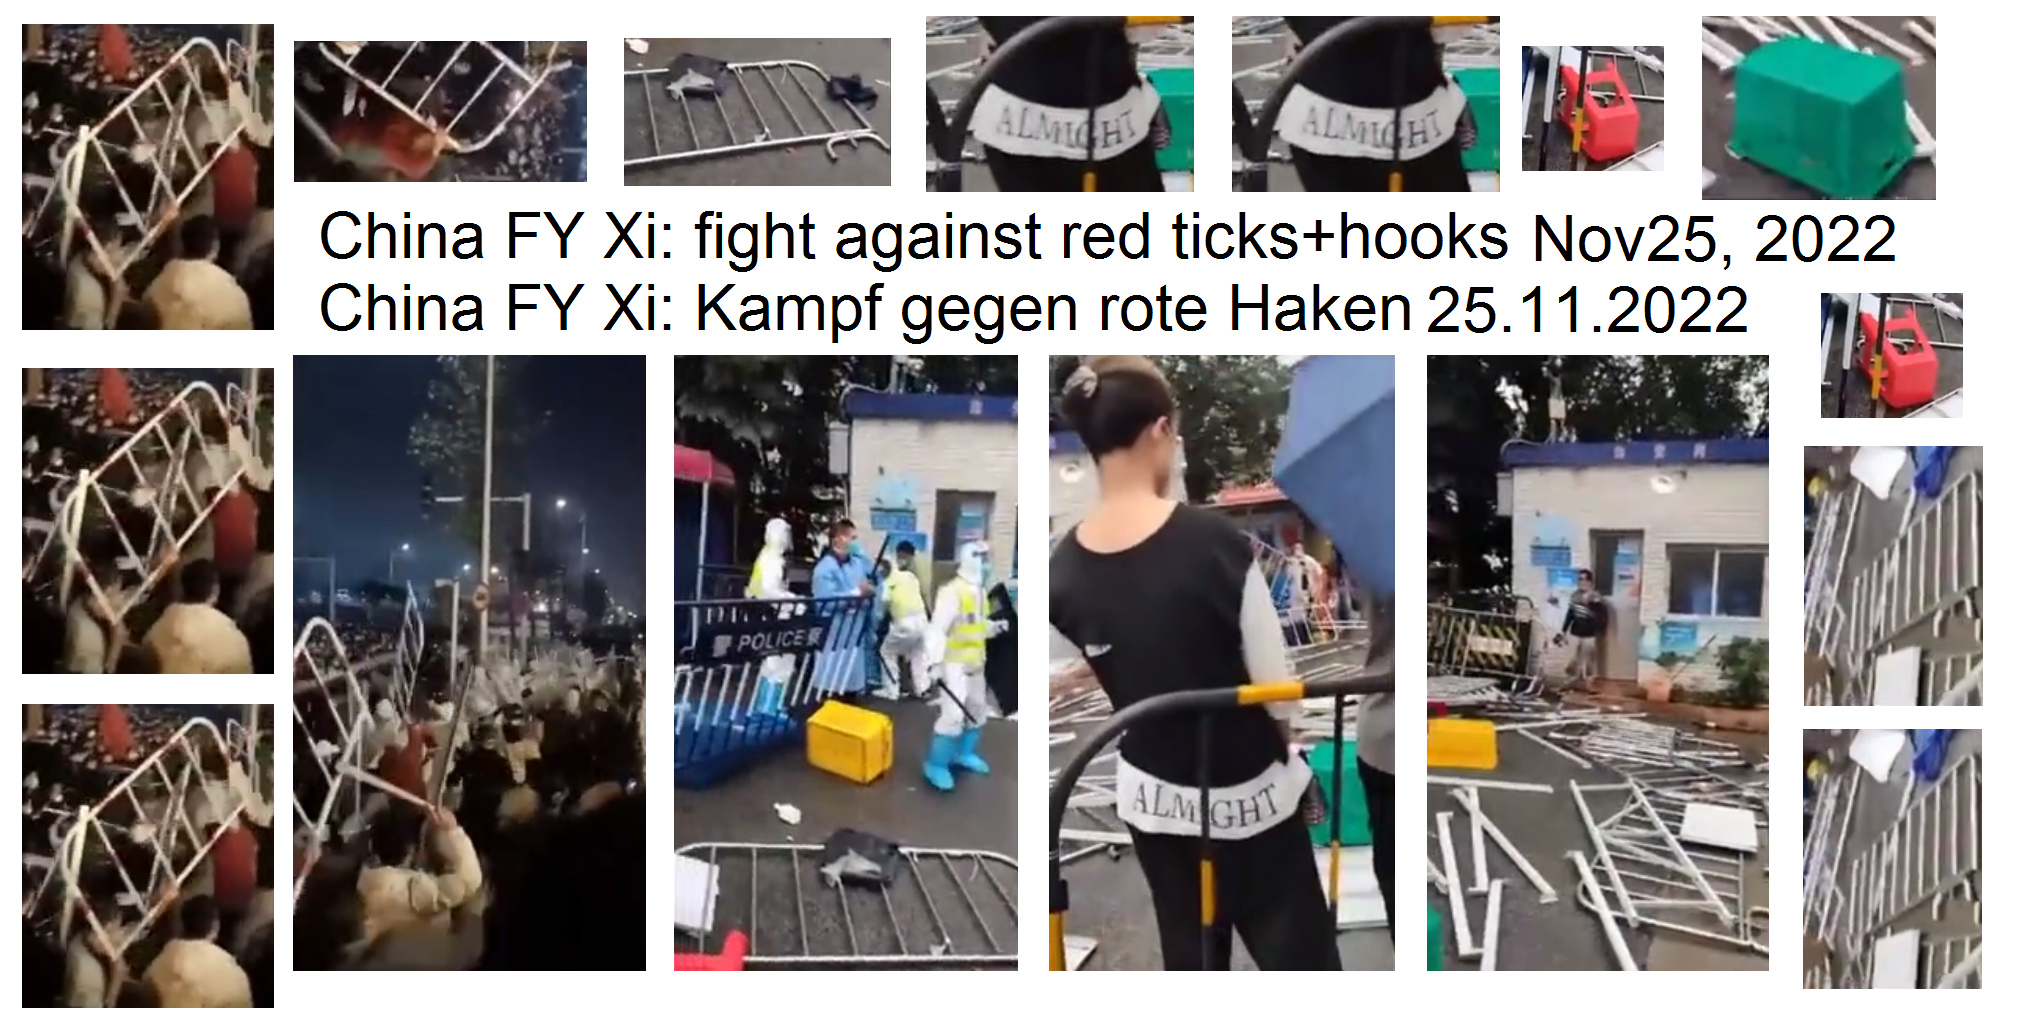 Video: China FY Xi Nov25, 2022: fight ag. red
                    ticks+hooks - Kampf gg. rote Haken (2'35'')